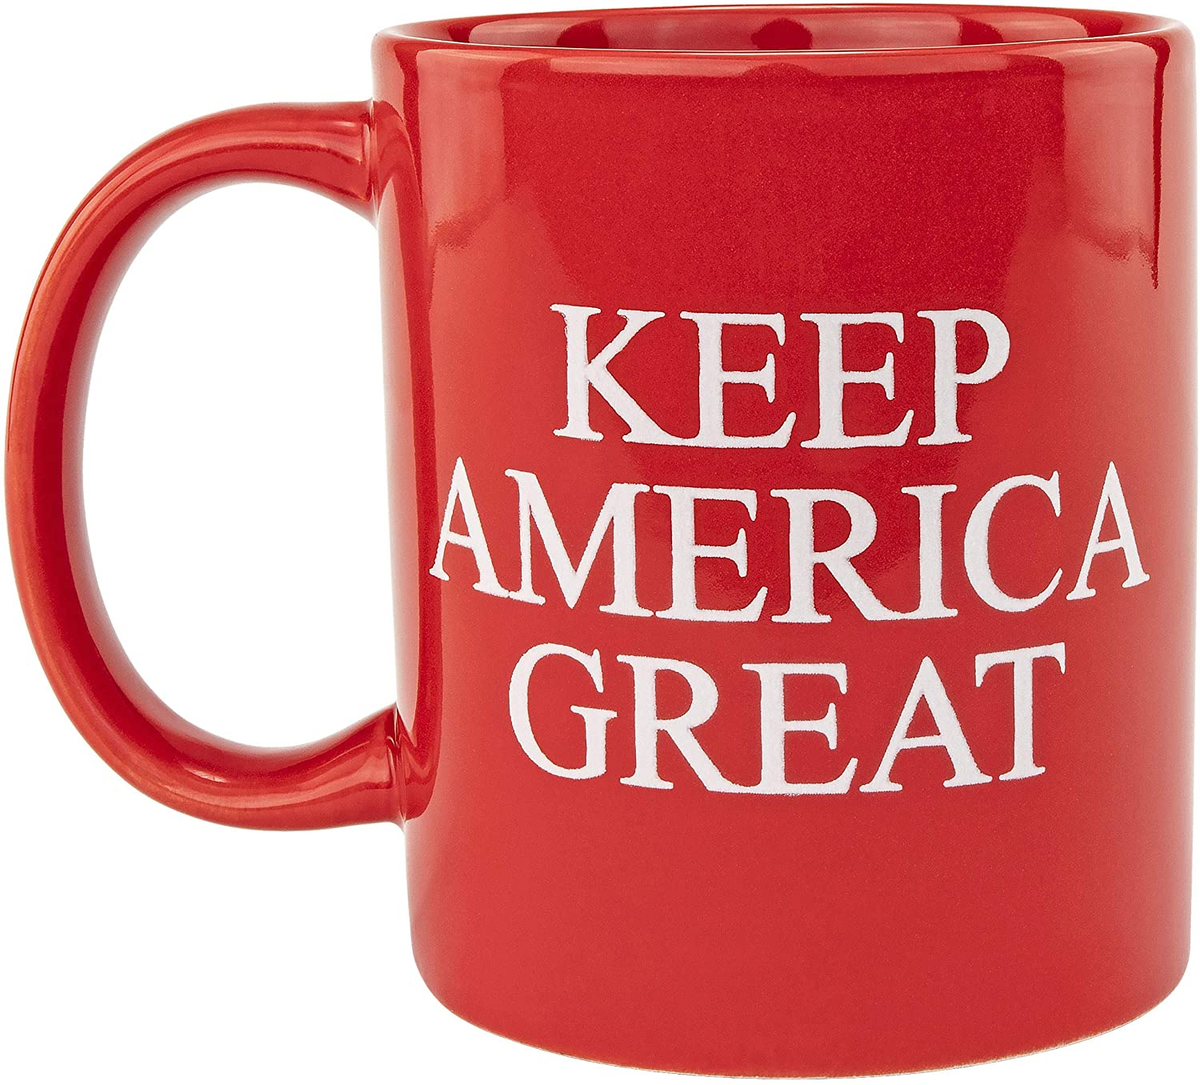 Donald Trump Presidential Seal Coffee Mug – Red - Annabelle's Interiors,  Inc. Design & Gift Shoppe